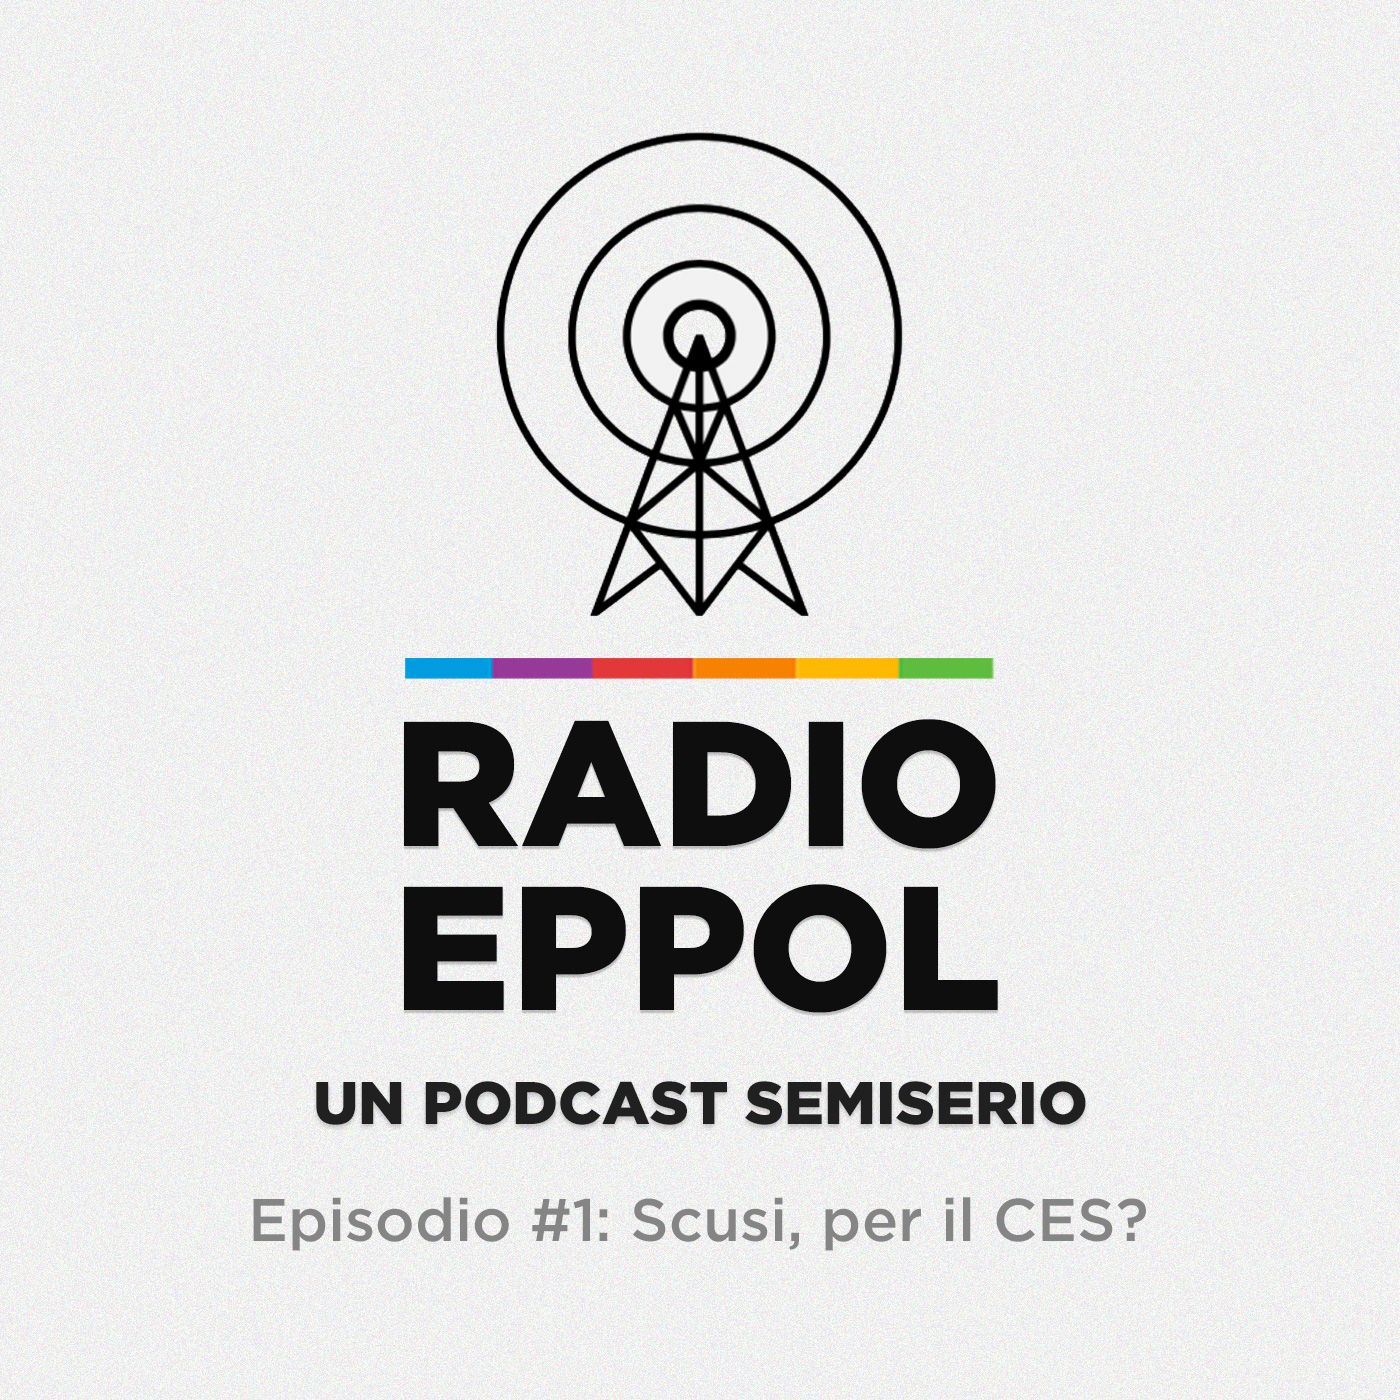 Copertina-podcast-episodio-1